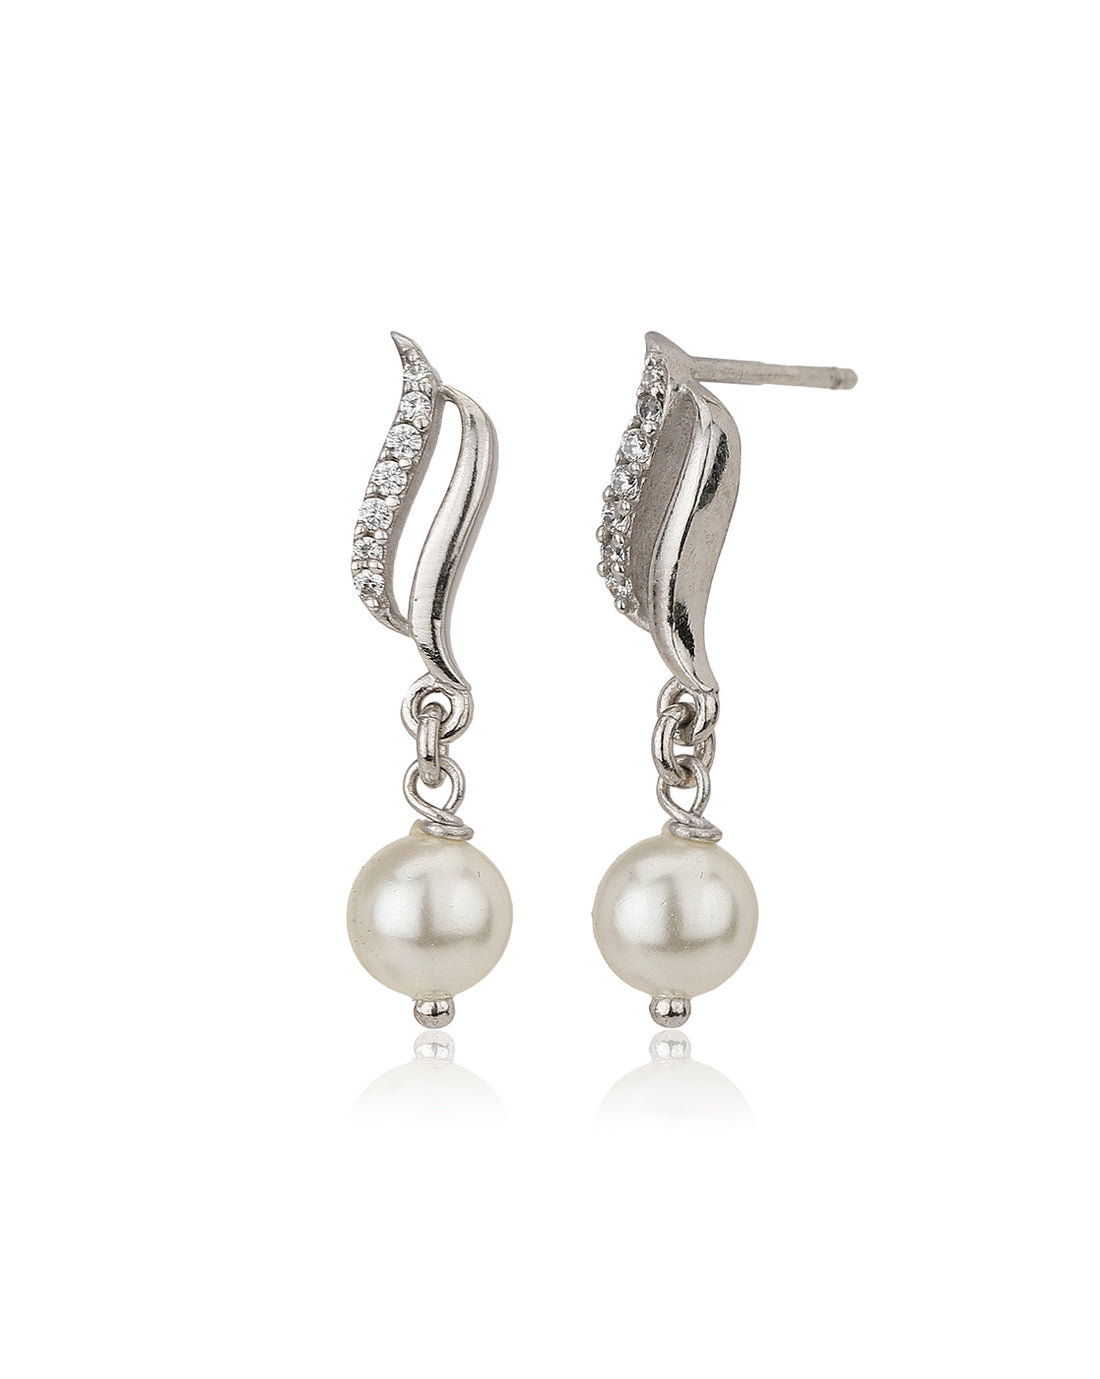 Carlton London Rhodium Plated Cz Drop Earring With Dangling Pearl For Women